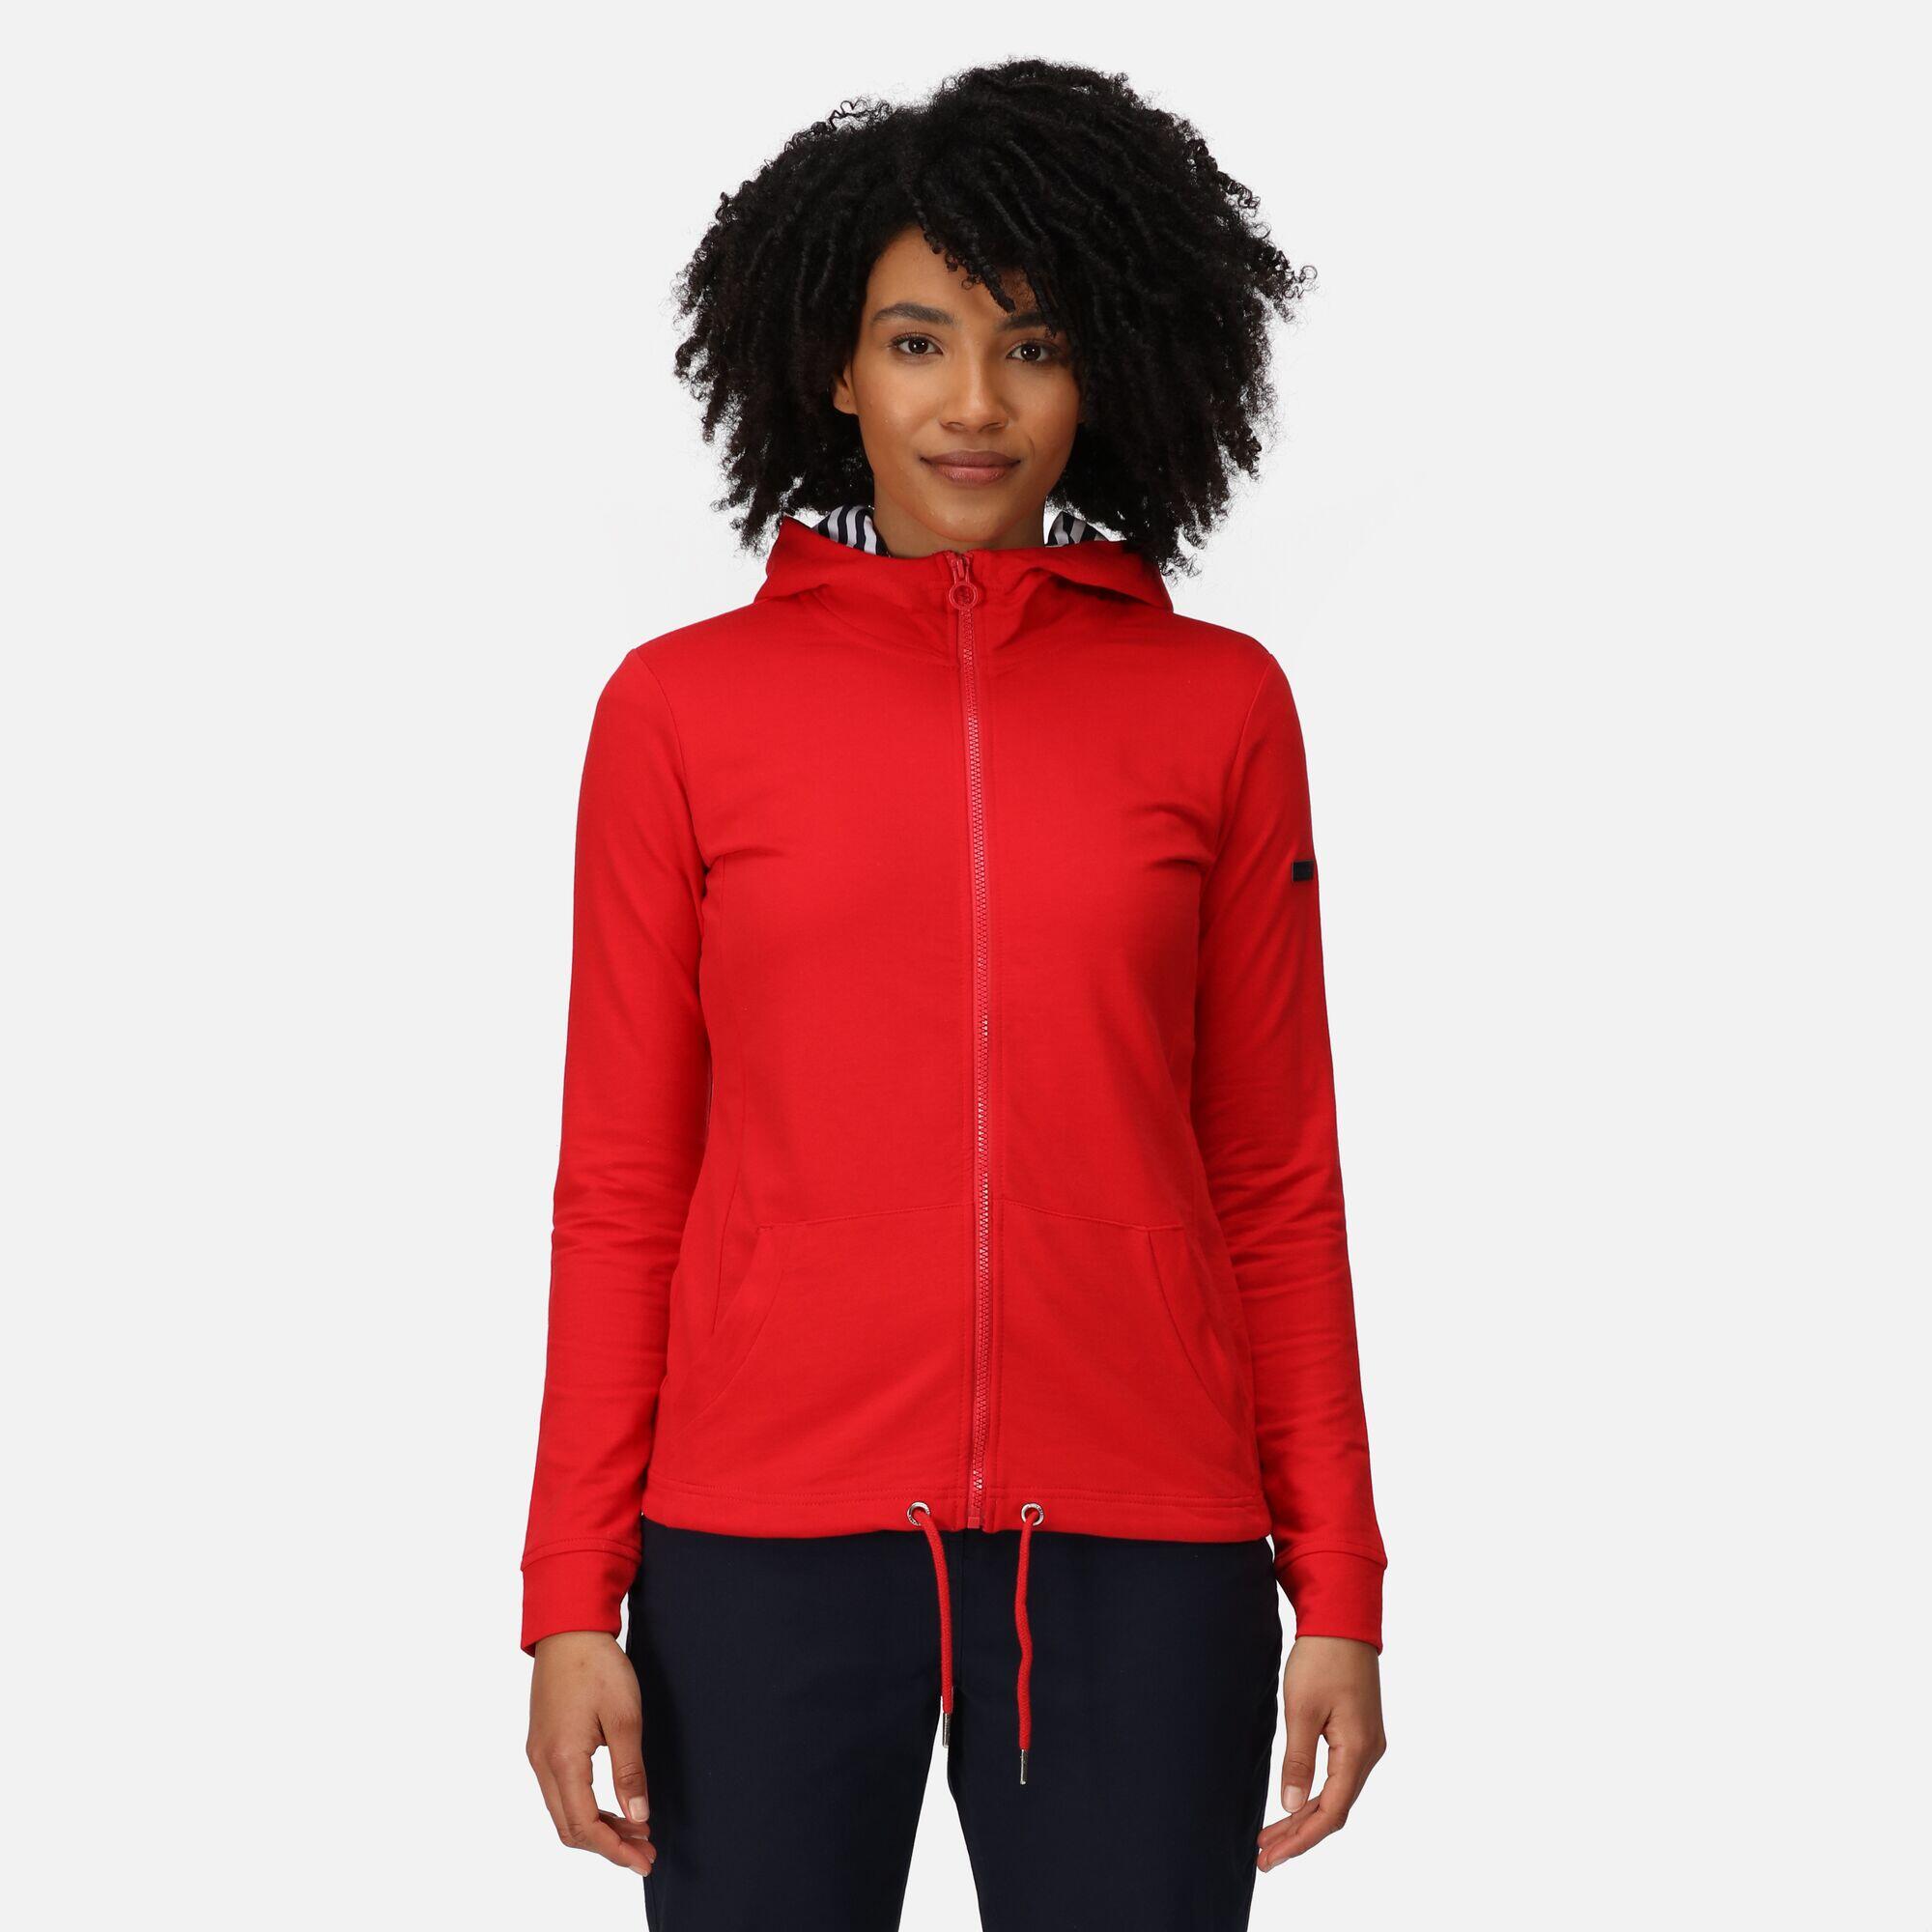 REGATTA Bayarma Women's Walking Full Zip Hoodie - True Red